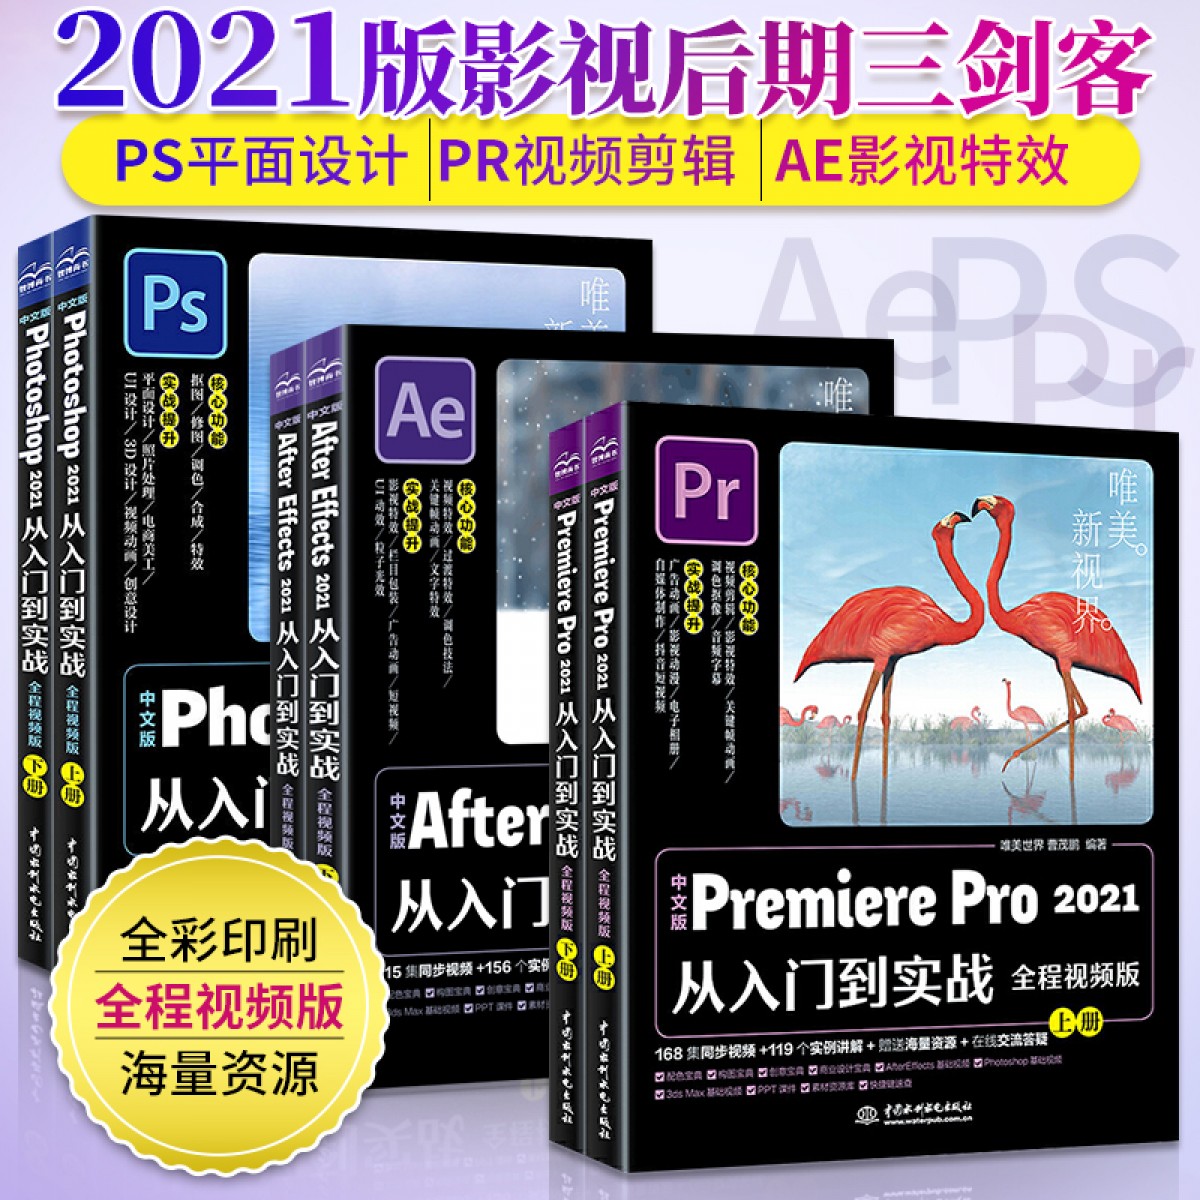 pr+ae+ps2021书籍零基础自学书 Photoshop教程书籍从入门到精通全6册 premiere pro视频影视剪辑后期制作美工修图平面设计软件教材